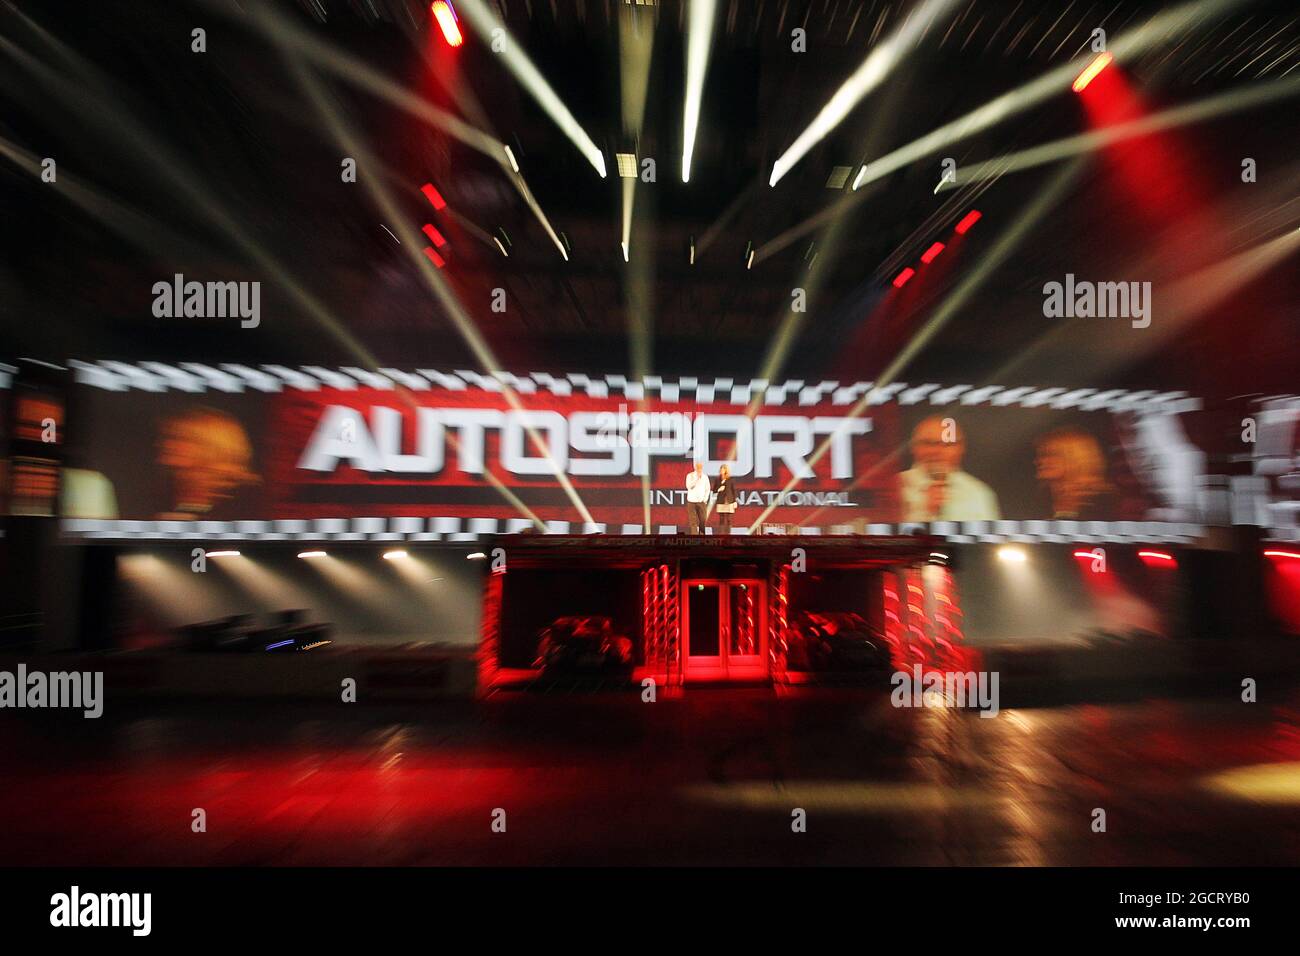 La Live Action Arena. Autosport International, sabato 12 gennaio 2013. National Exhibition Centre, Birmingham, Inghilterra. Foto Stock